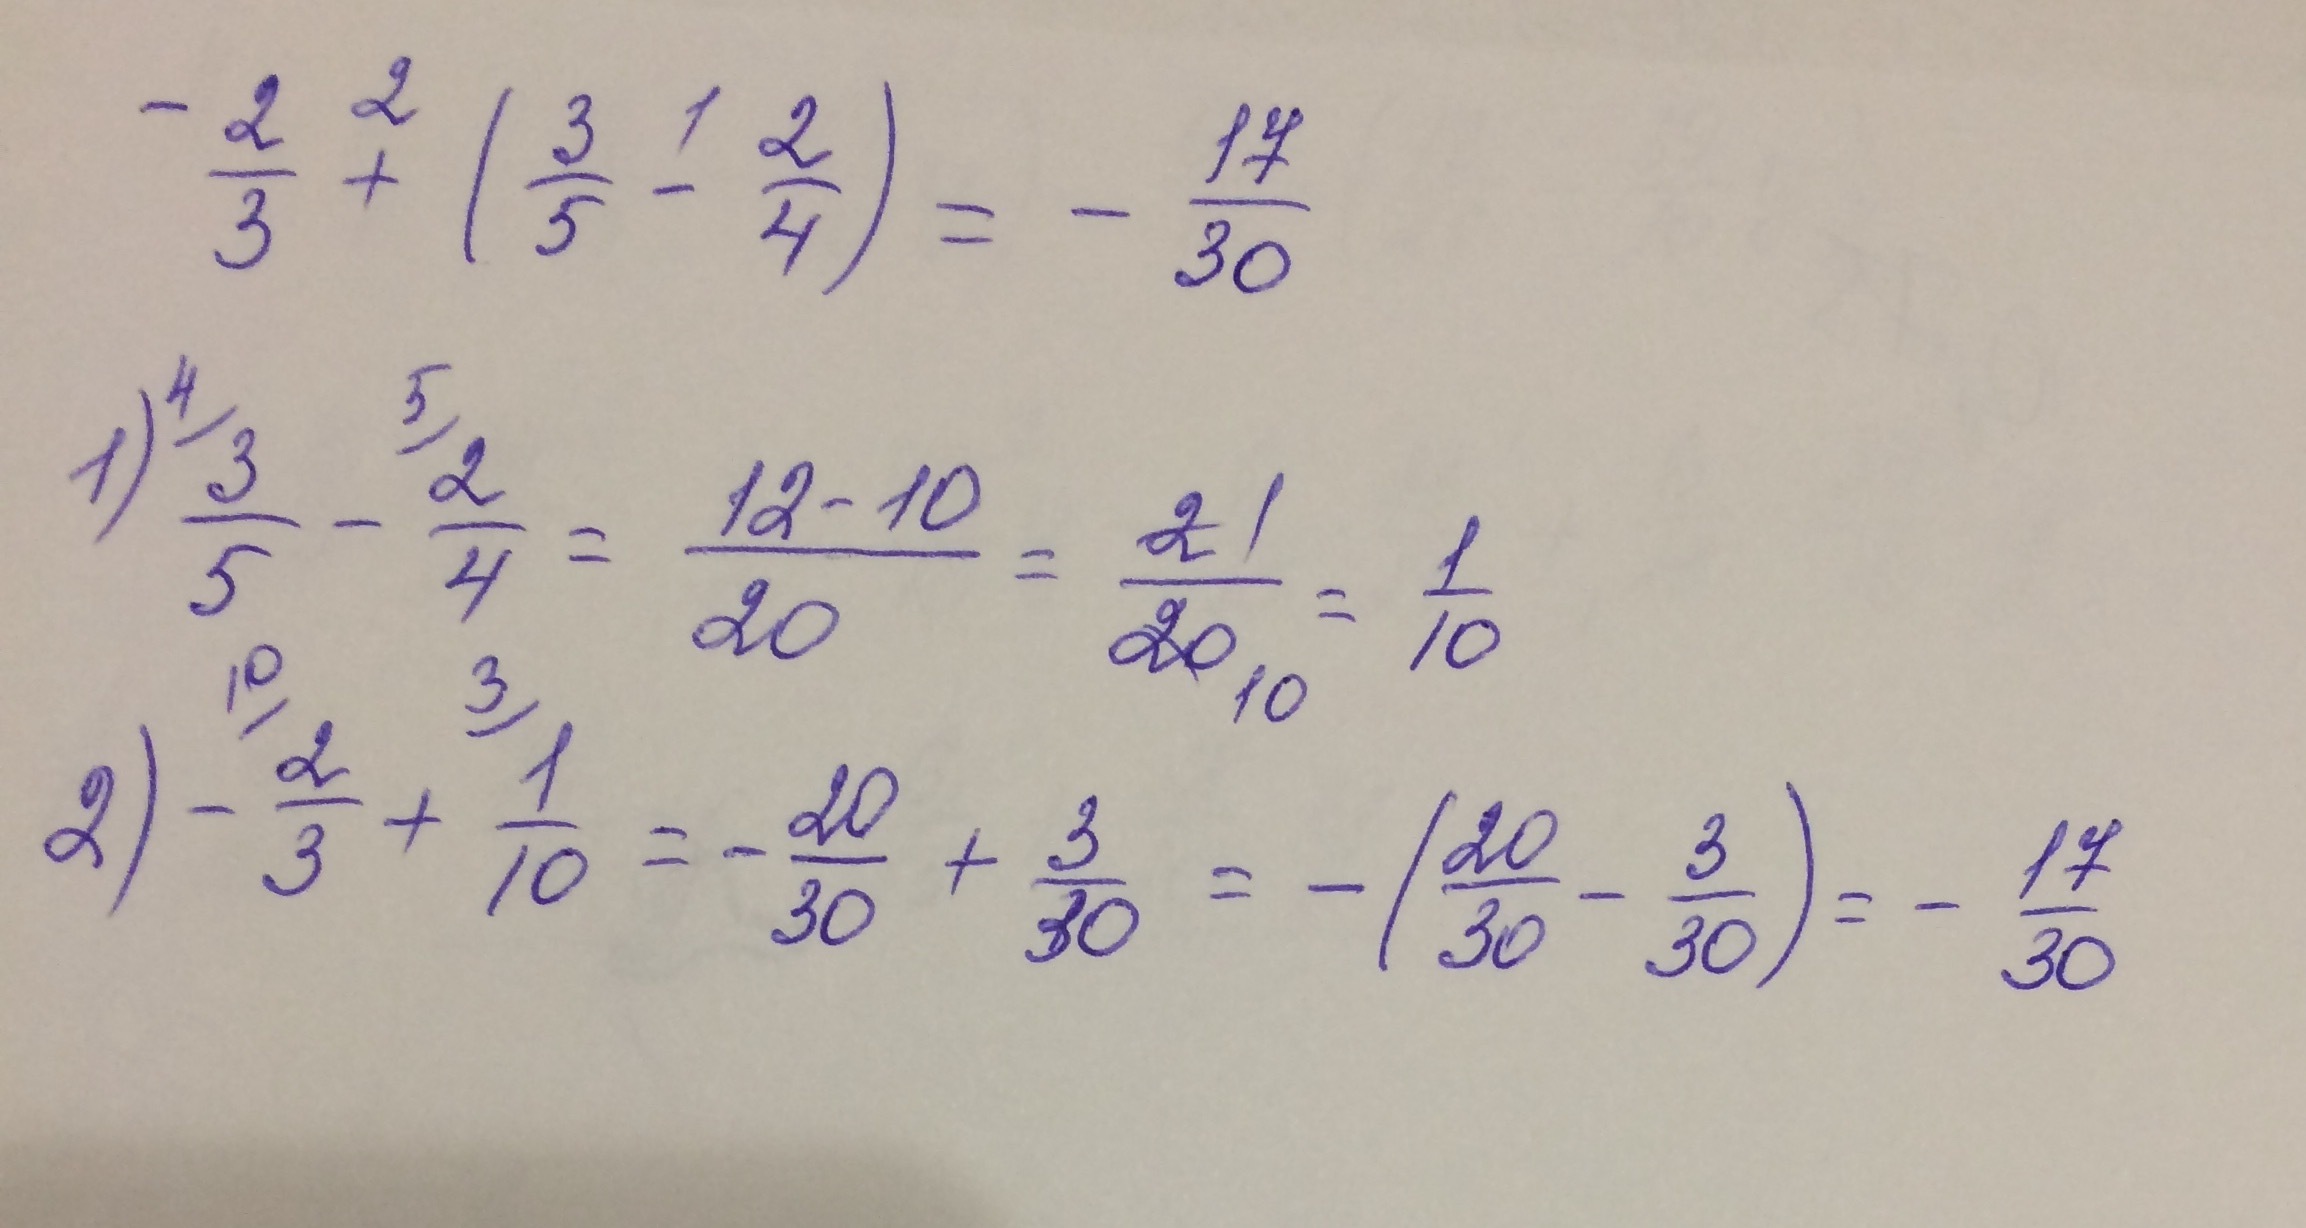 1.3 5.3. А3 и а3+. 3+ 2/3. 3+(-2). (A-2)³+(A+2)³.